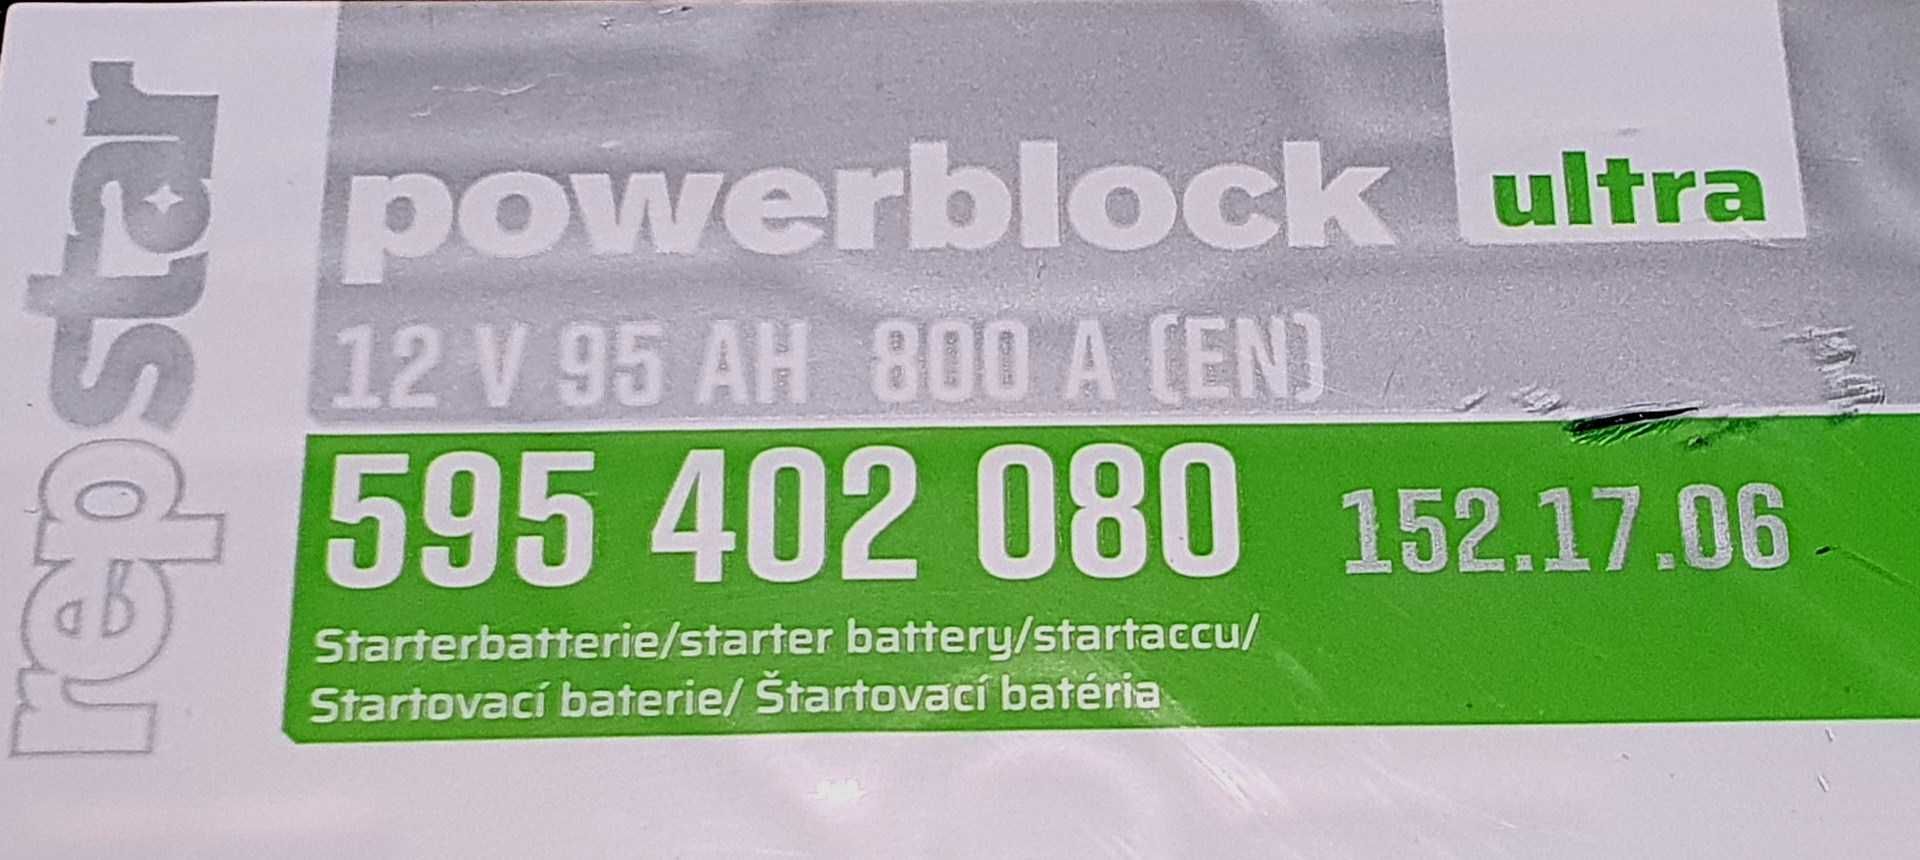 Baterie auto repstar Powerblock ultra 12V 95Ah ca noua folosita 3 luni